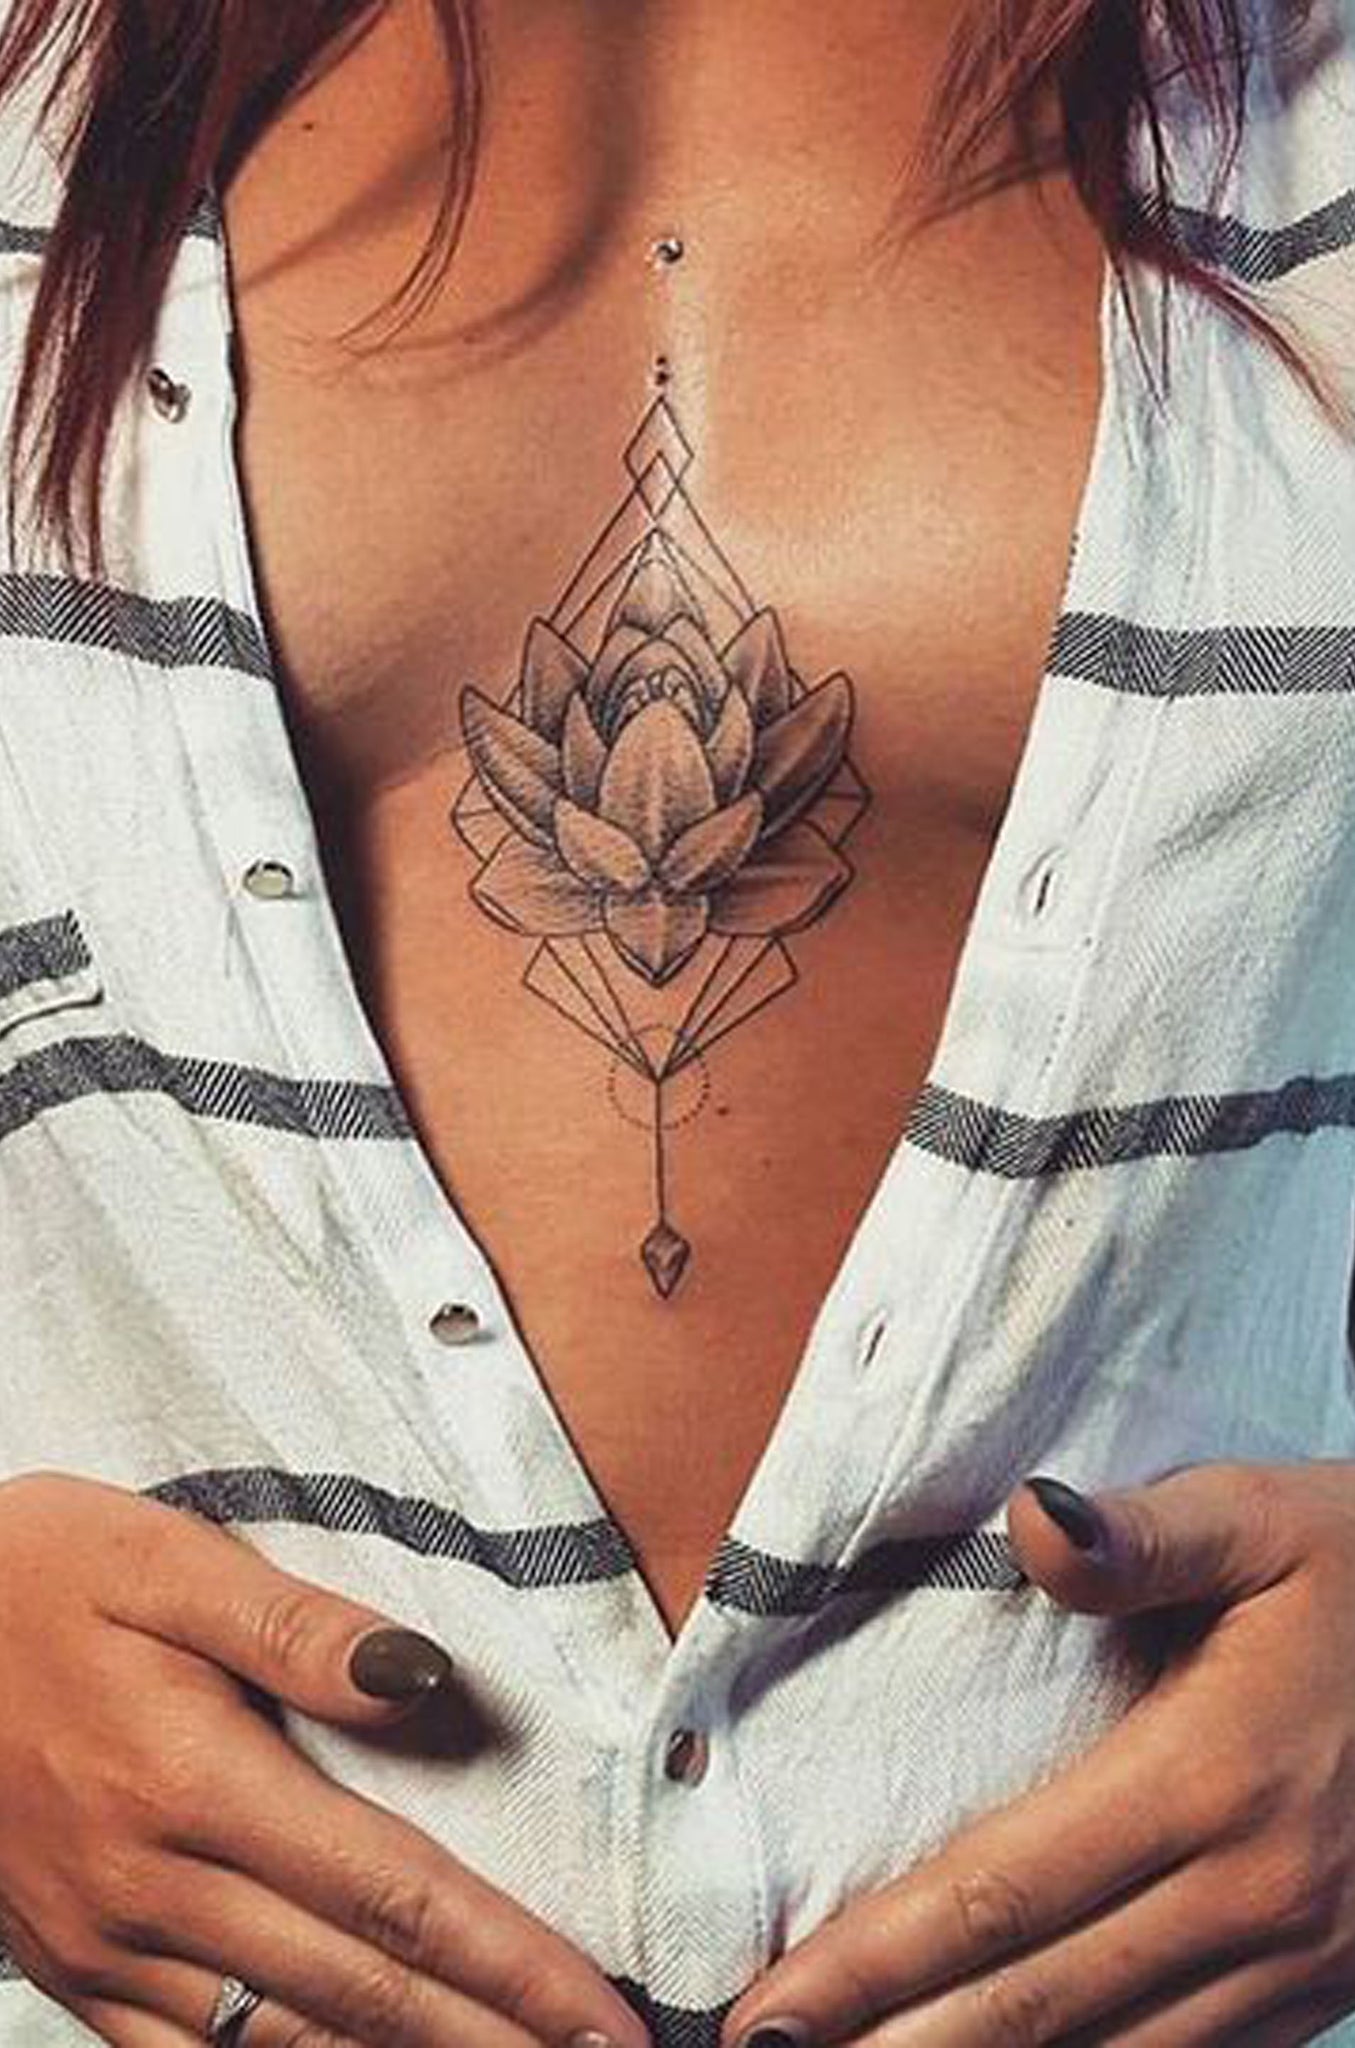 Cool Sternum Tattoo Ideas for Women - Tribal Boho Geometric Lotus Chest Tat -  ideas geniales del tatuaje del esternón para las mujeres - www.MyBodiArt.com #tattoos